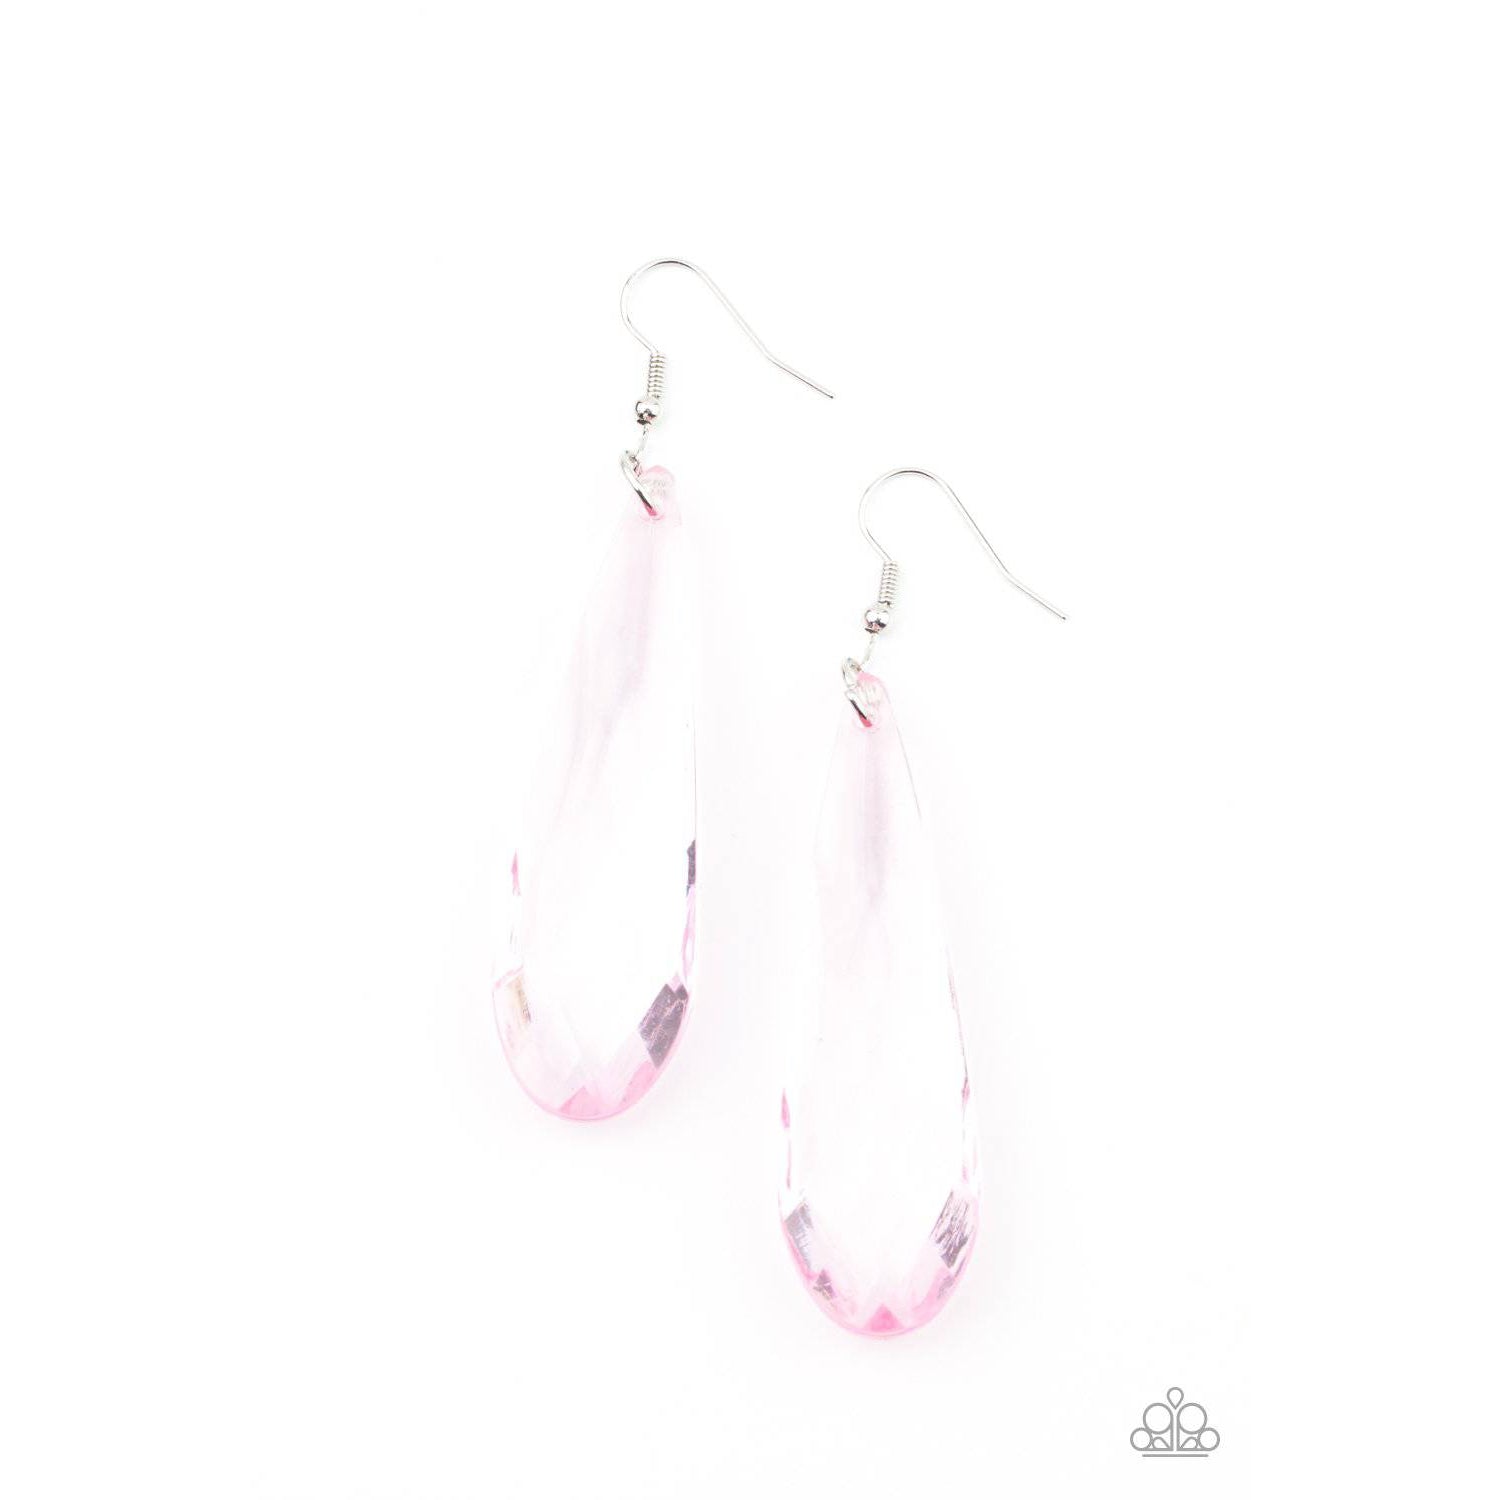 Crystal Crowns - Pink Teardrop Crystal Earrings - Paparazzi Accessories - GlaMarous Titi Jewels